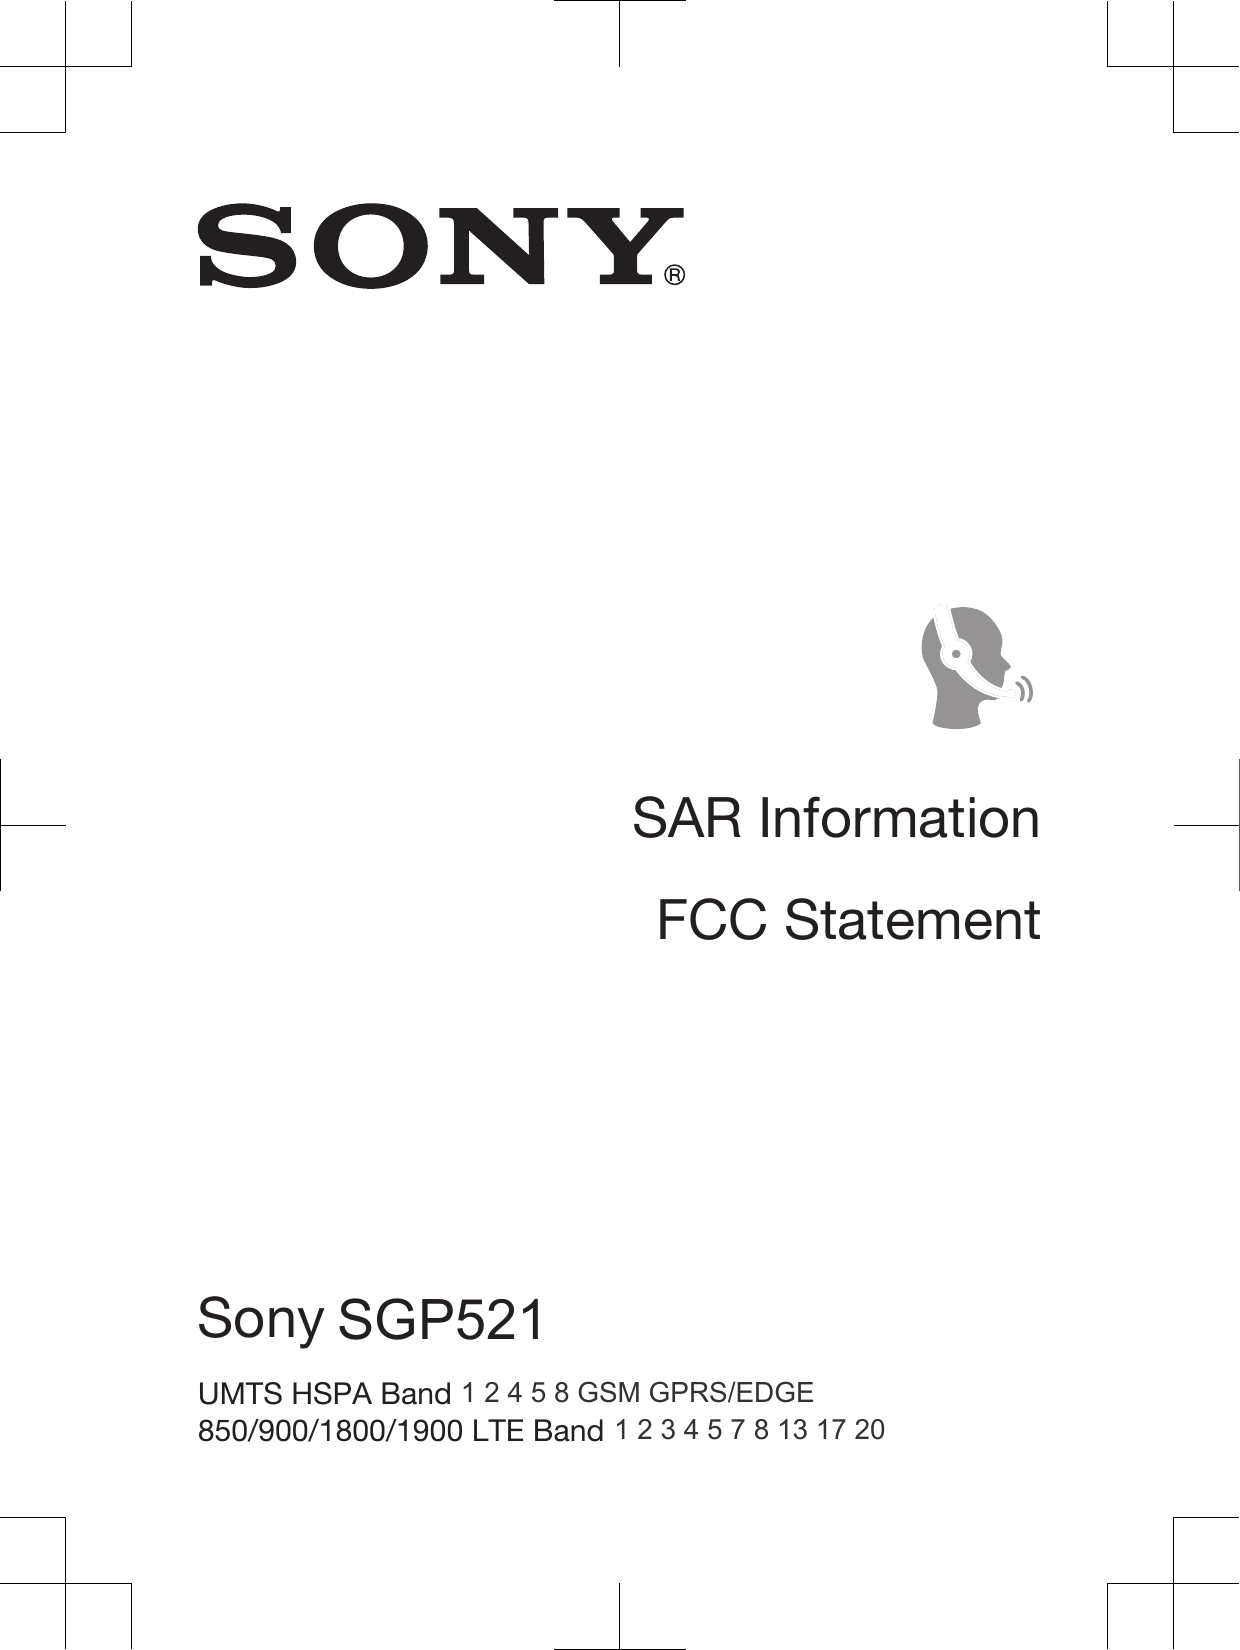 SAR InformationFCC StatementDeclaration of ConformitySony SGP321 UMTS HSPA Band 1 5 8 GSM GPRS/EDGE850/900/1800/1900 LTE Band 1 3 5 7 8 20SGP5211 2 4 5 8 GSM GPRS/EDGE1 2 3 4 5 7 8 13 17 20